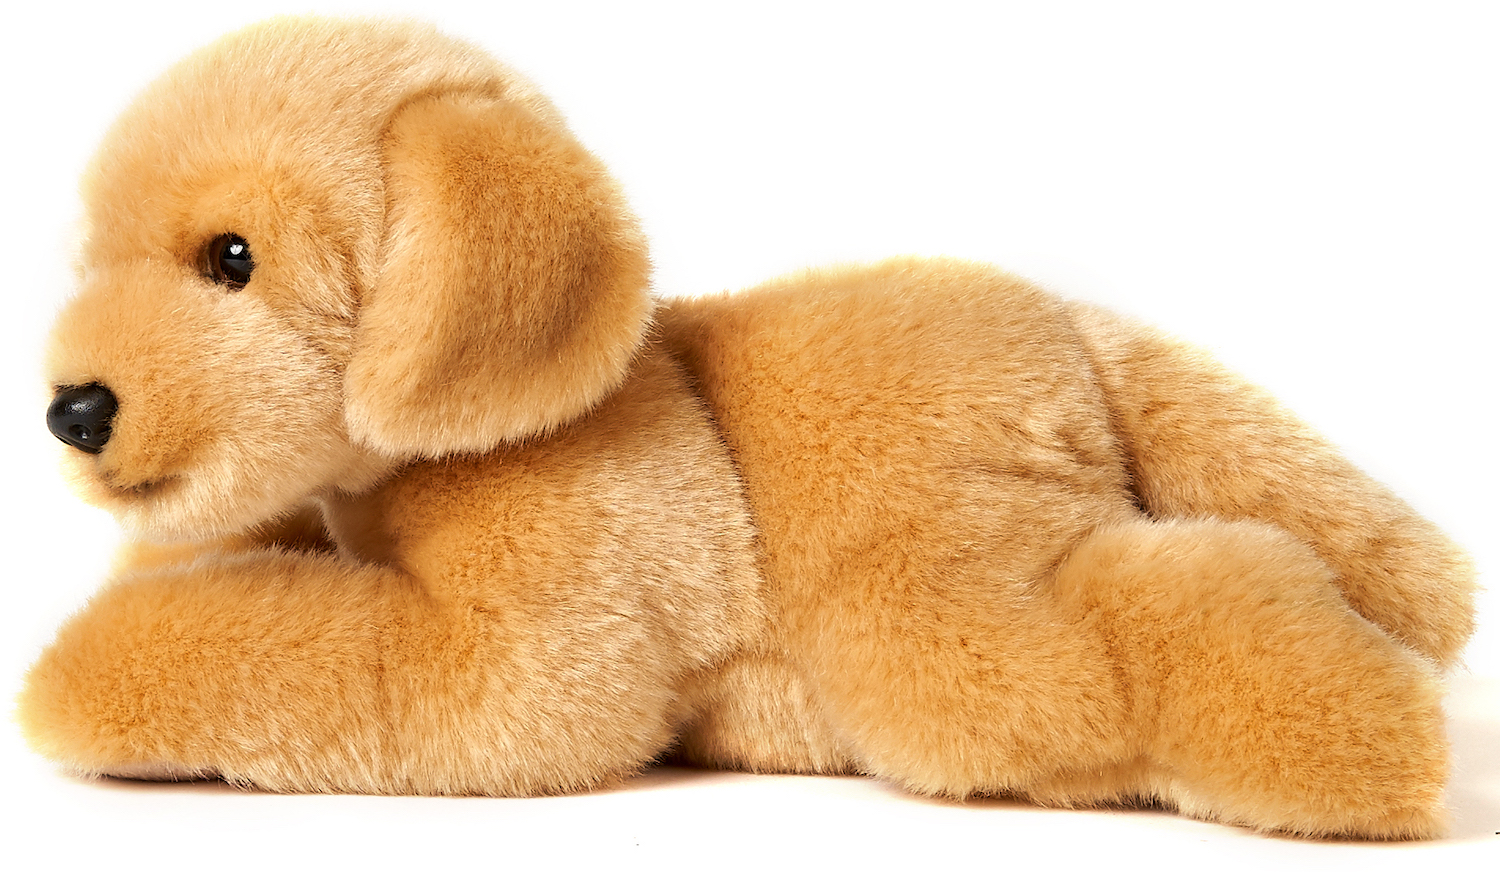 Golden Retriever Puppy, lying